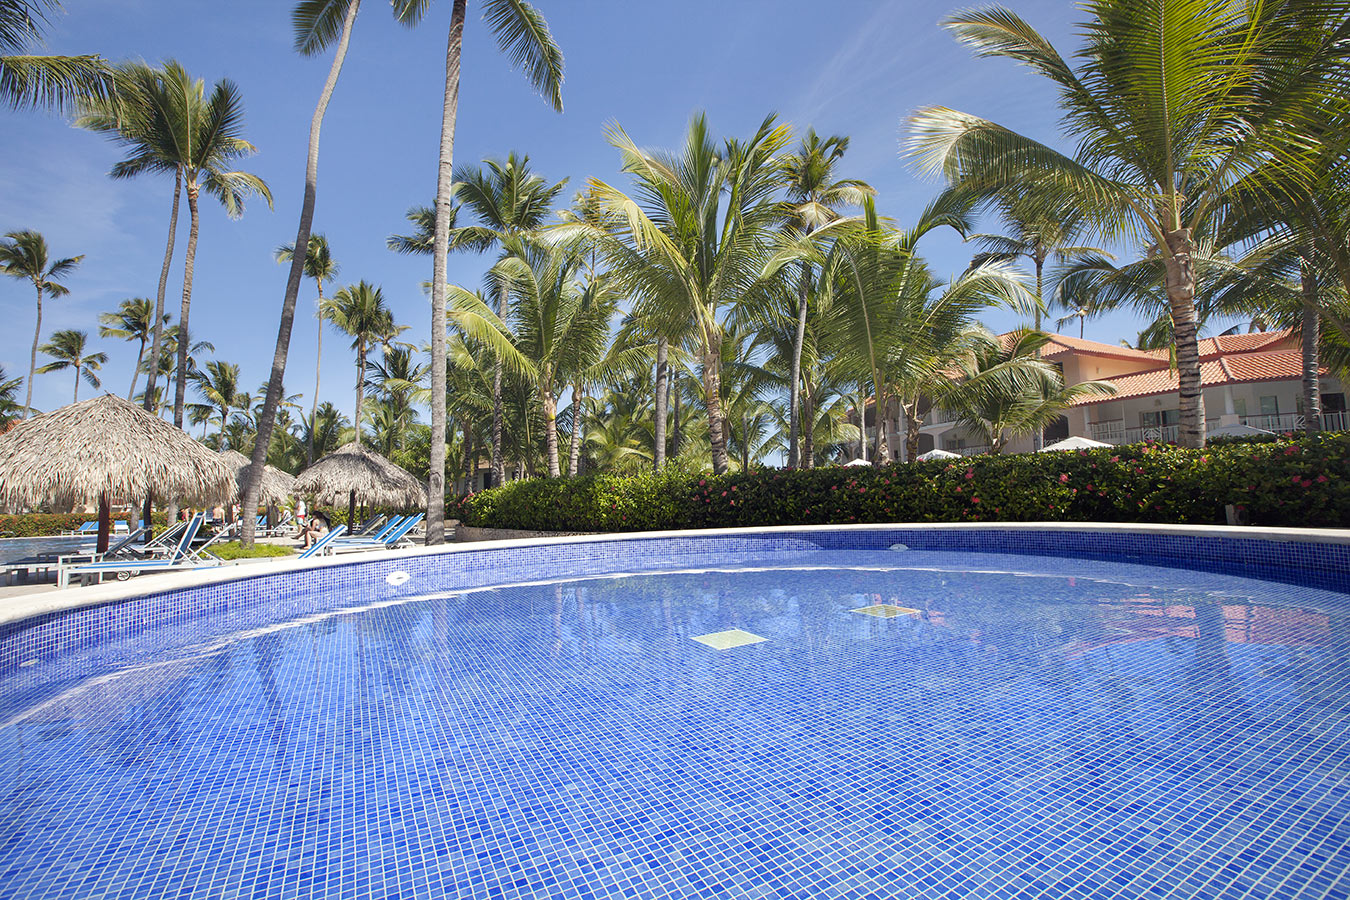 Majestic Elegance Punta Cana - All Inclusive - Dominican Republic